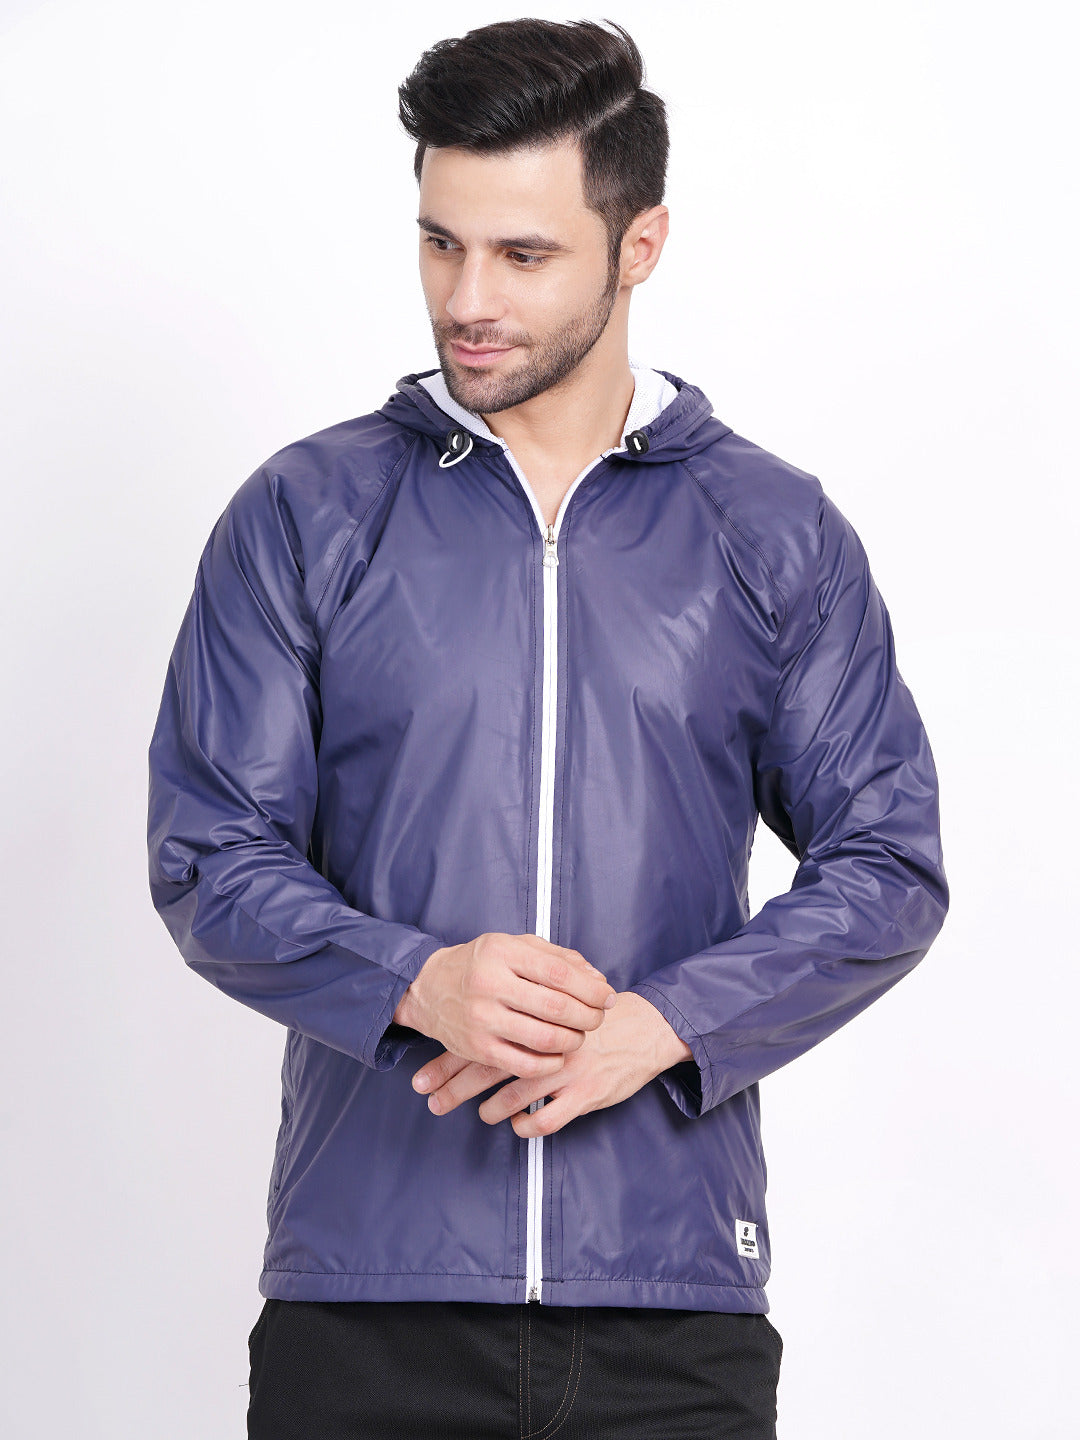 Men's reversible double sided jacket